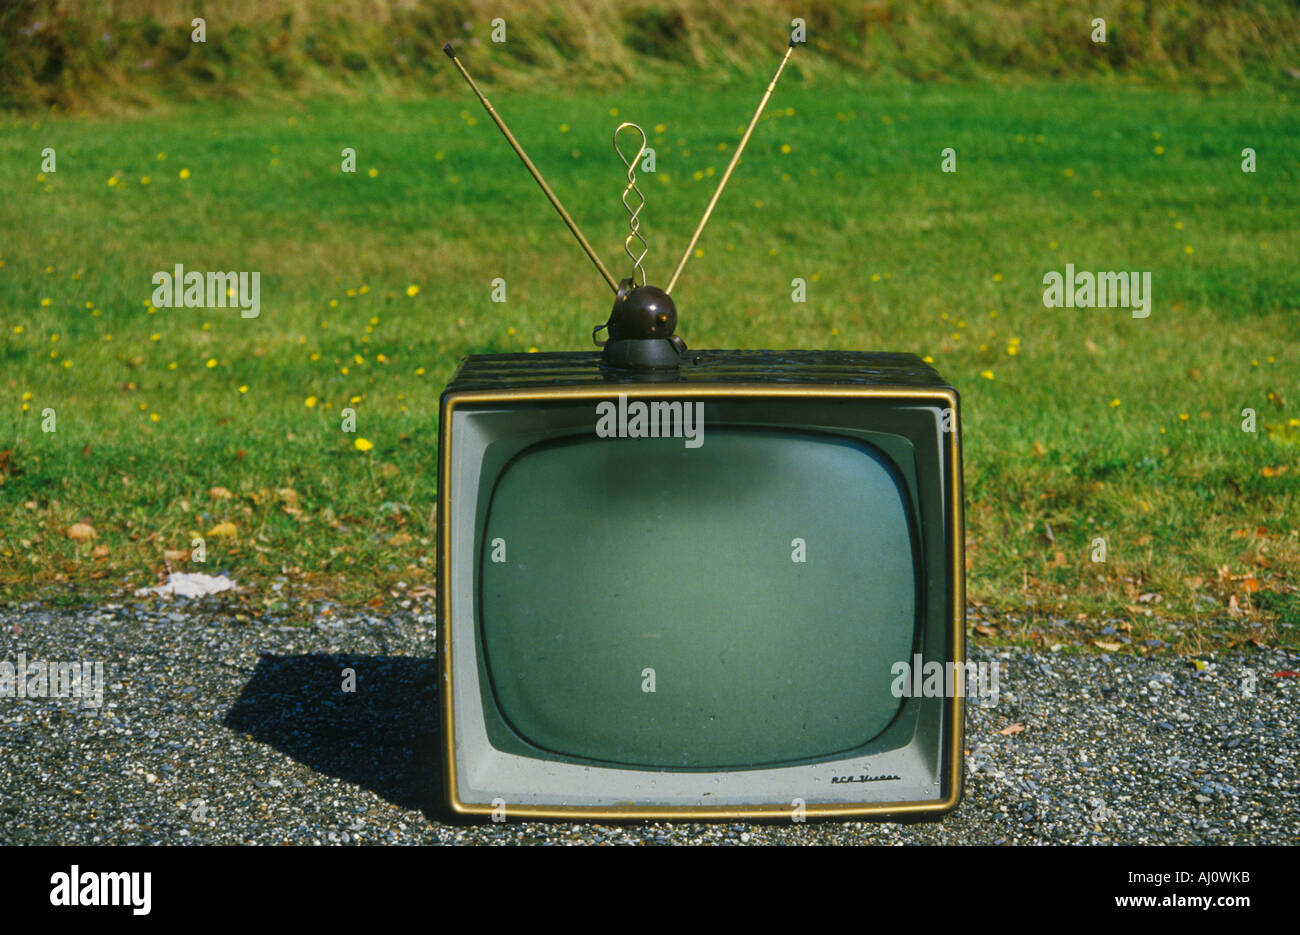 Old retro television set with rabbit ears antennae New England Stock Photo